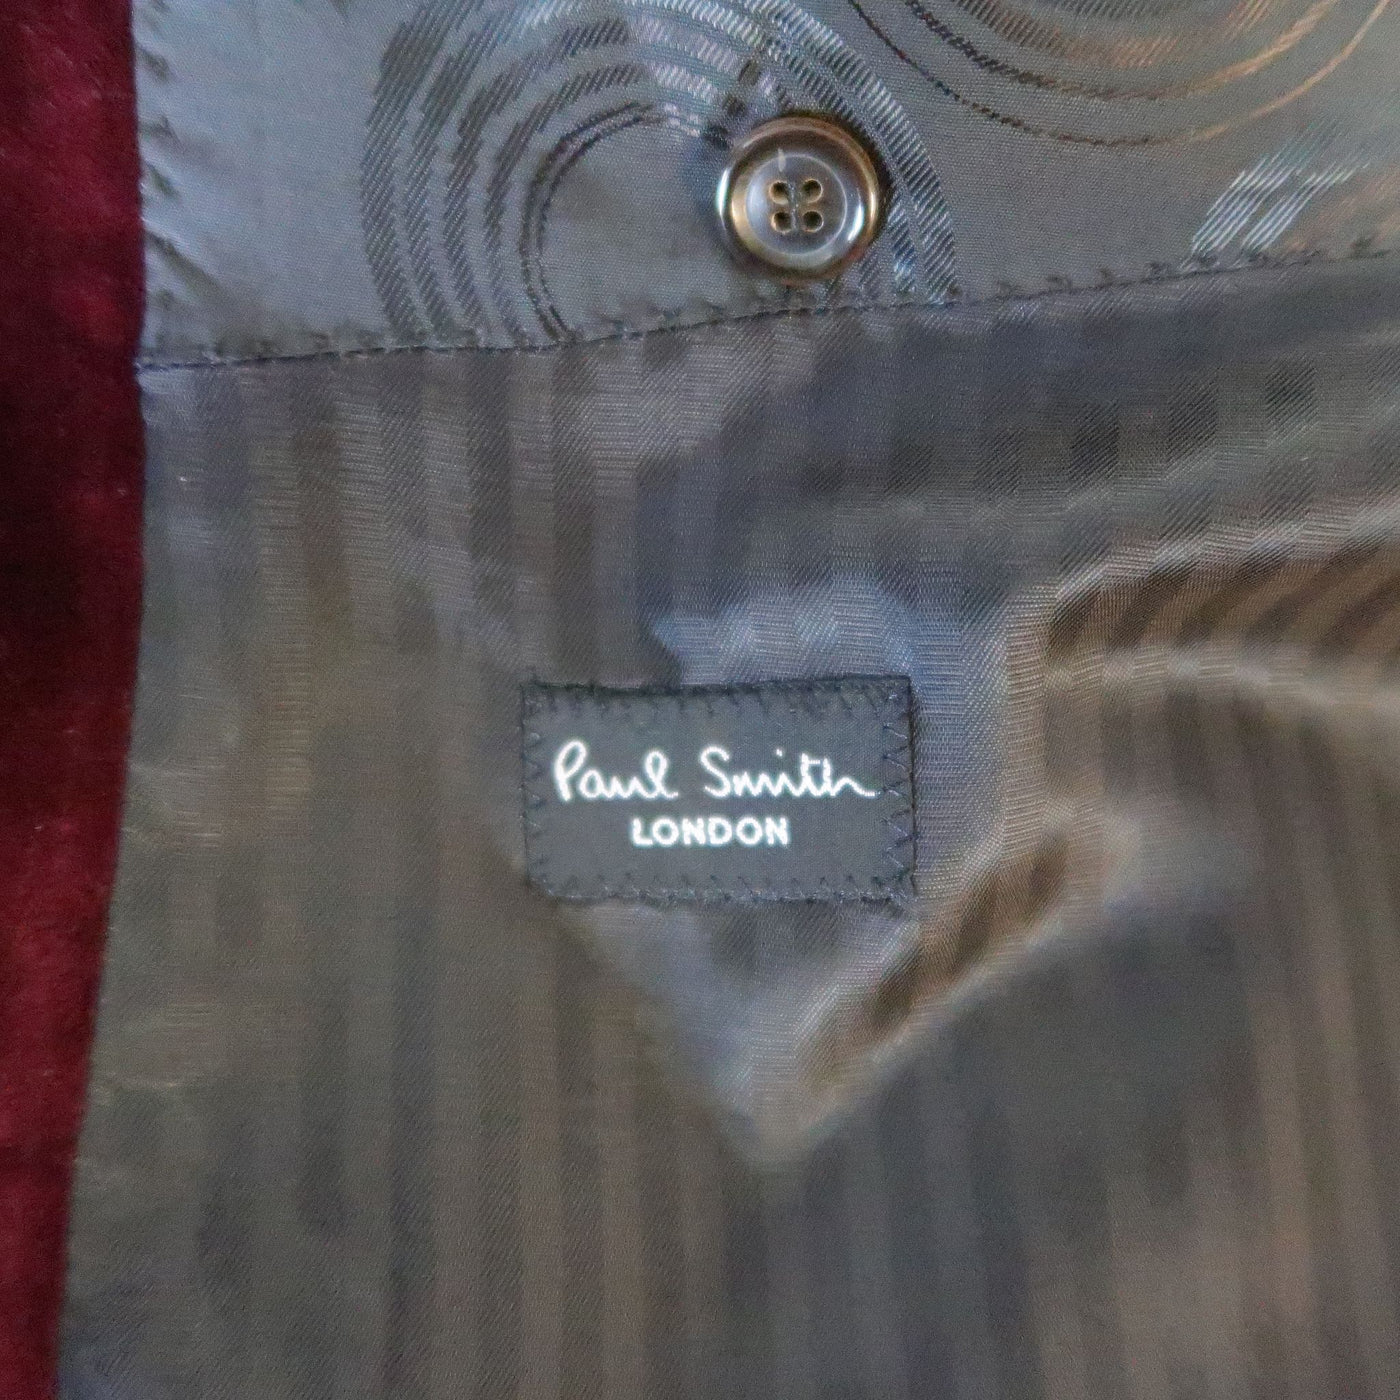 PAUL SMITH 40 Long Burgundy Velvet Notch Lapel Sport Coat Jacket